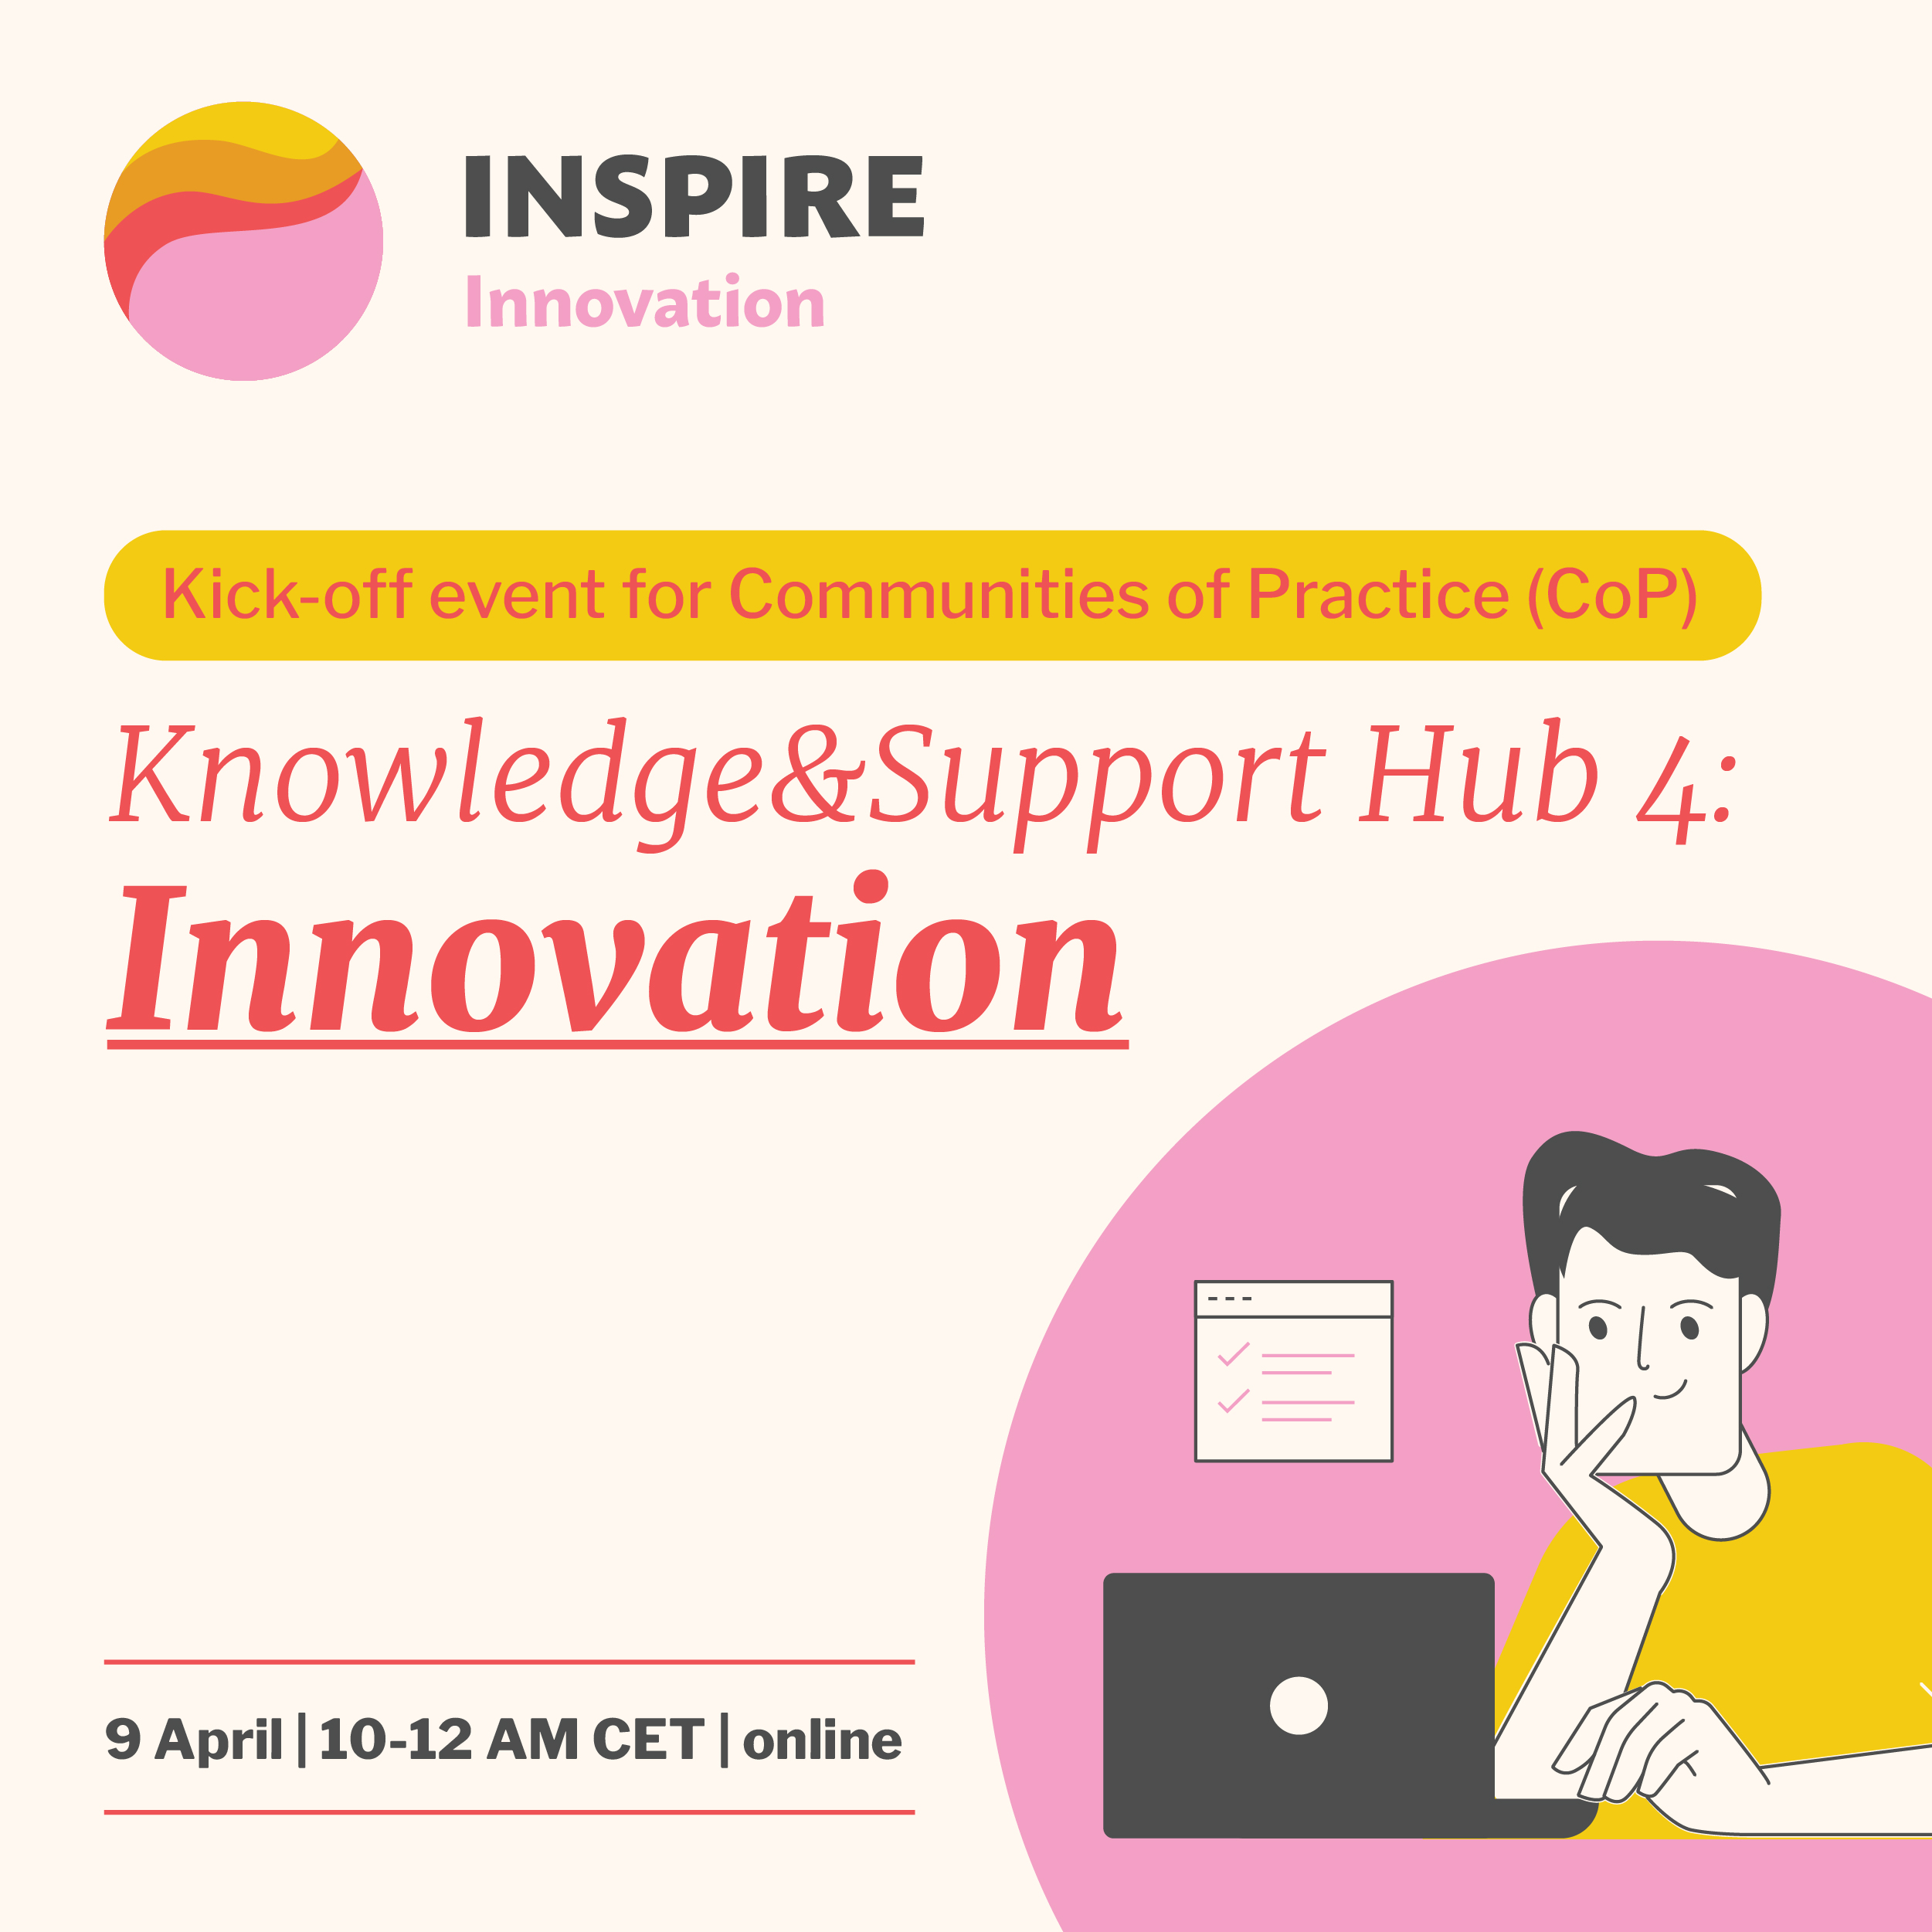 INSPIRE KSH4: Innovation